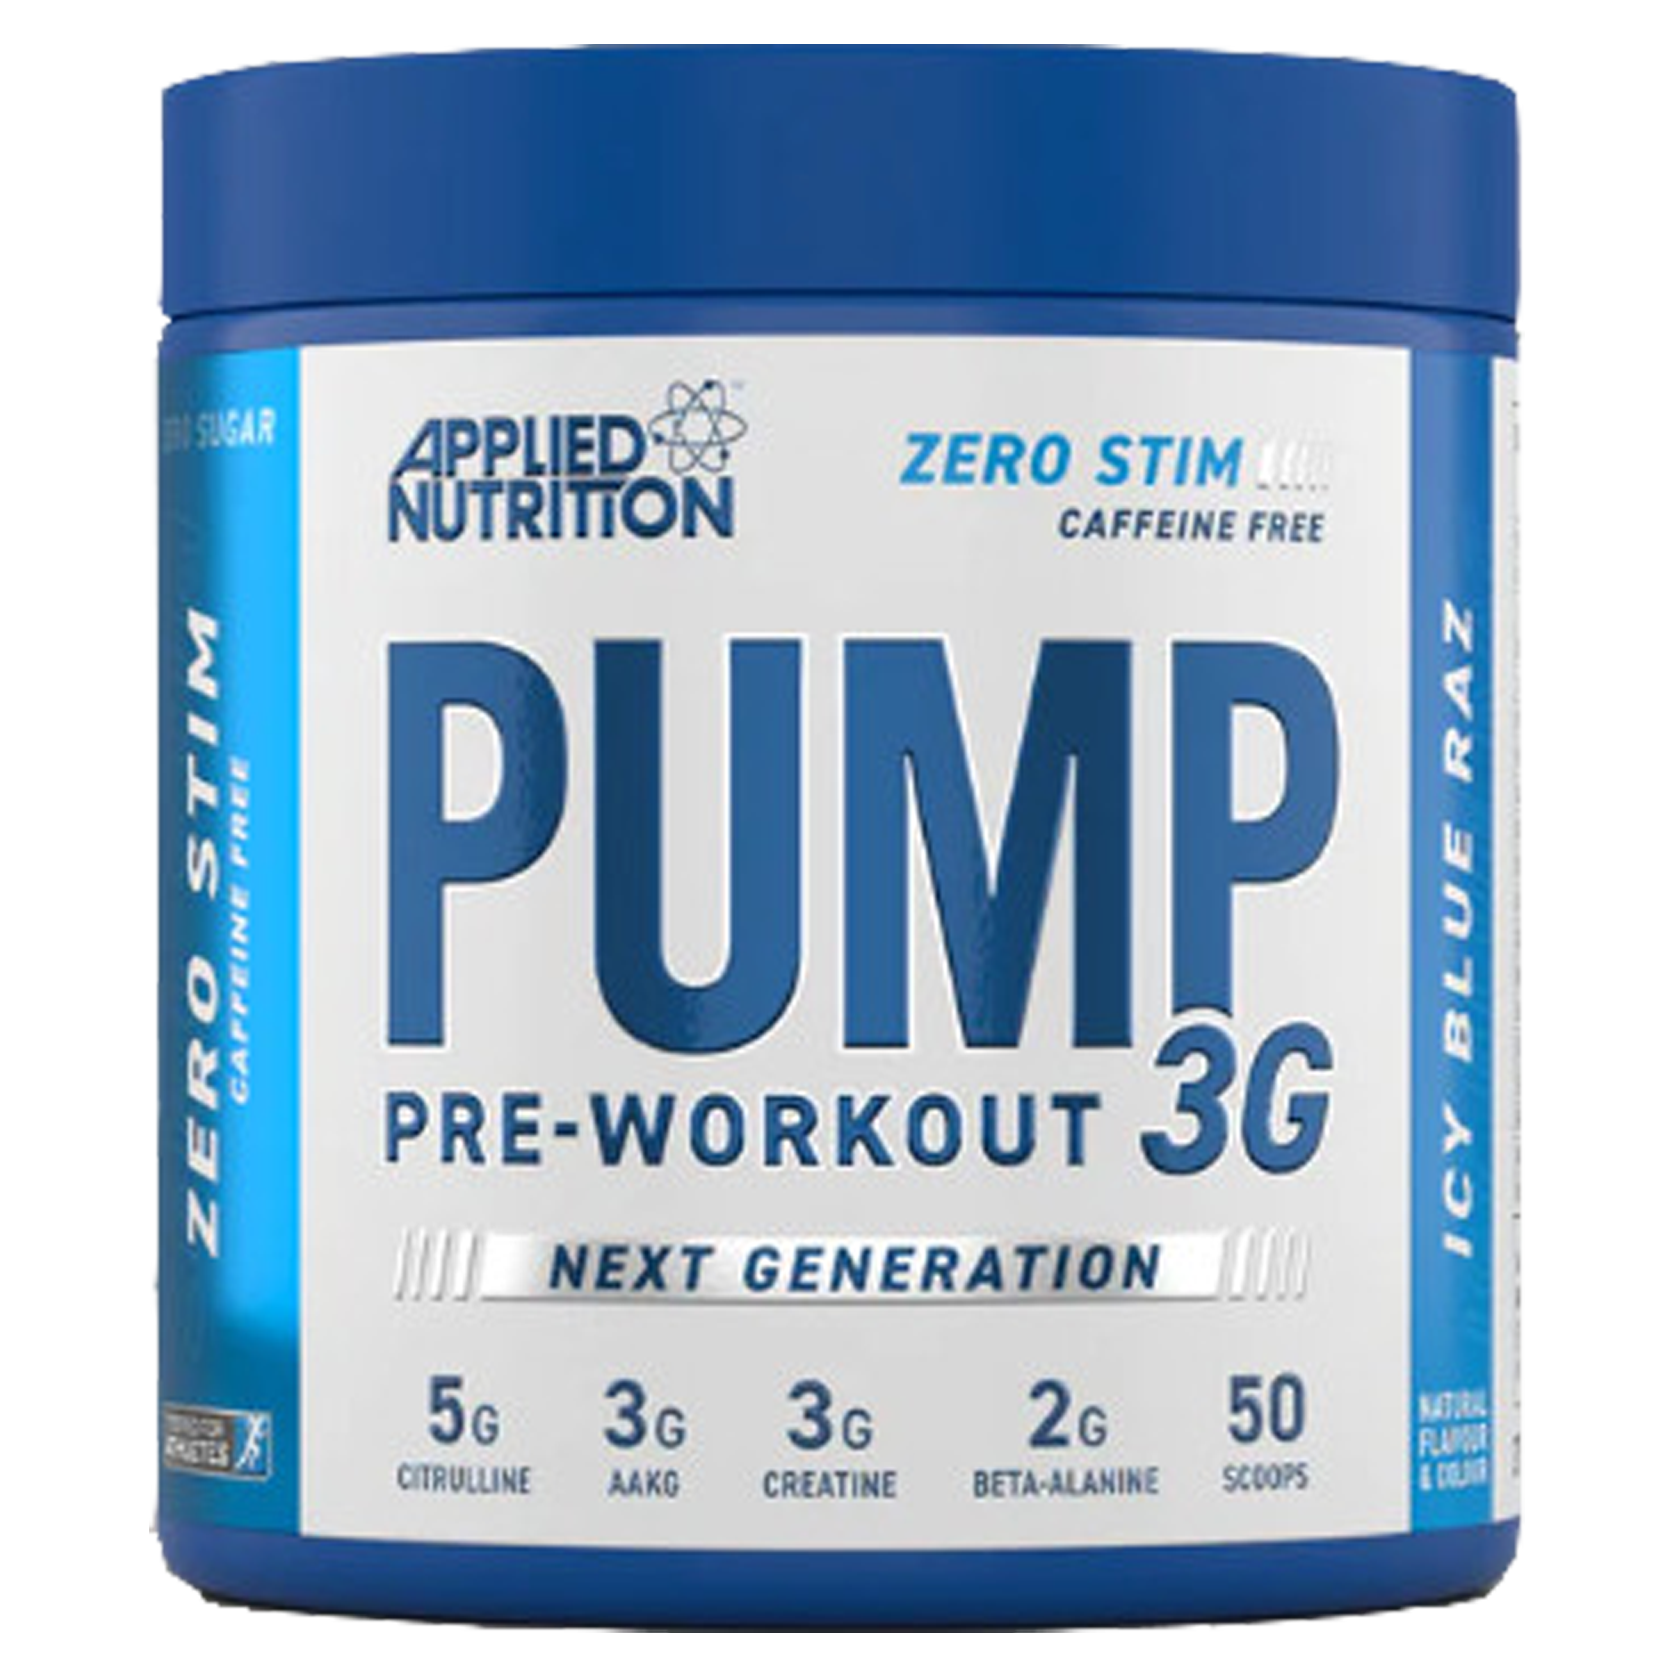 Pump 3G Pre Workout Applied Nutrition 50 scoops vị Icy Blue Raz không có